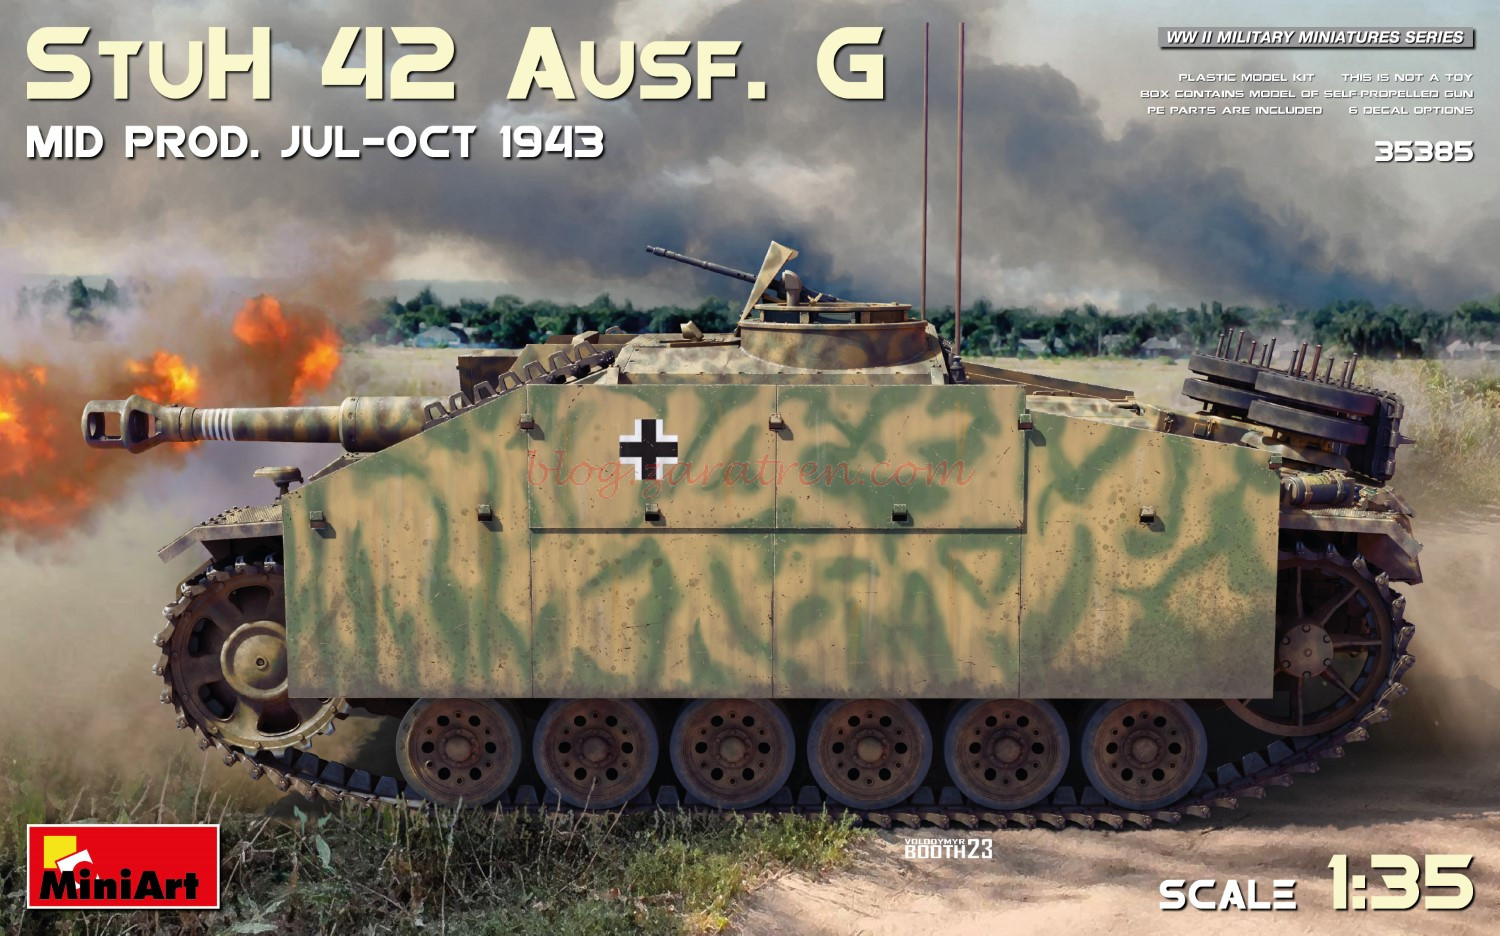 Miniart Models – Tanque StuH 42 Ausf. G, Escala 1:35, Ref: 35385